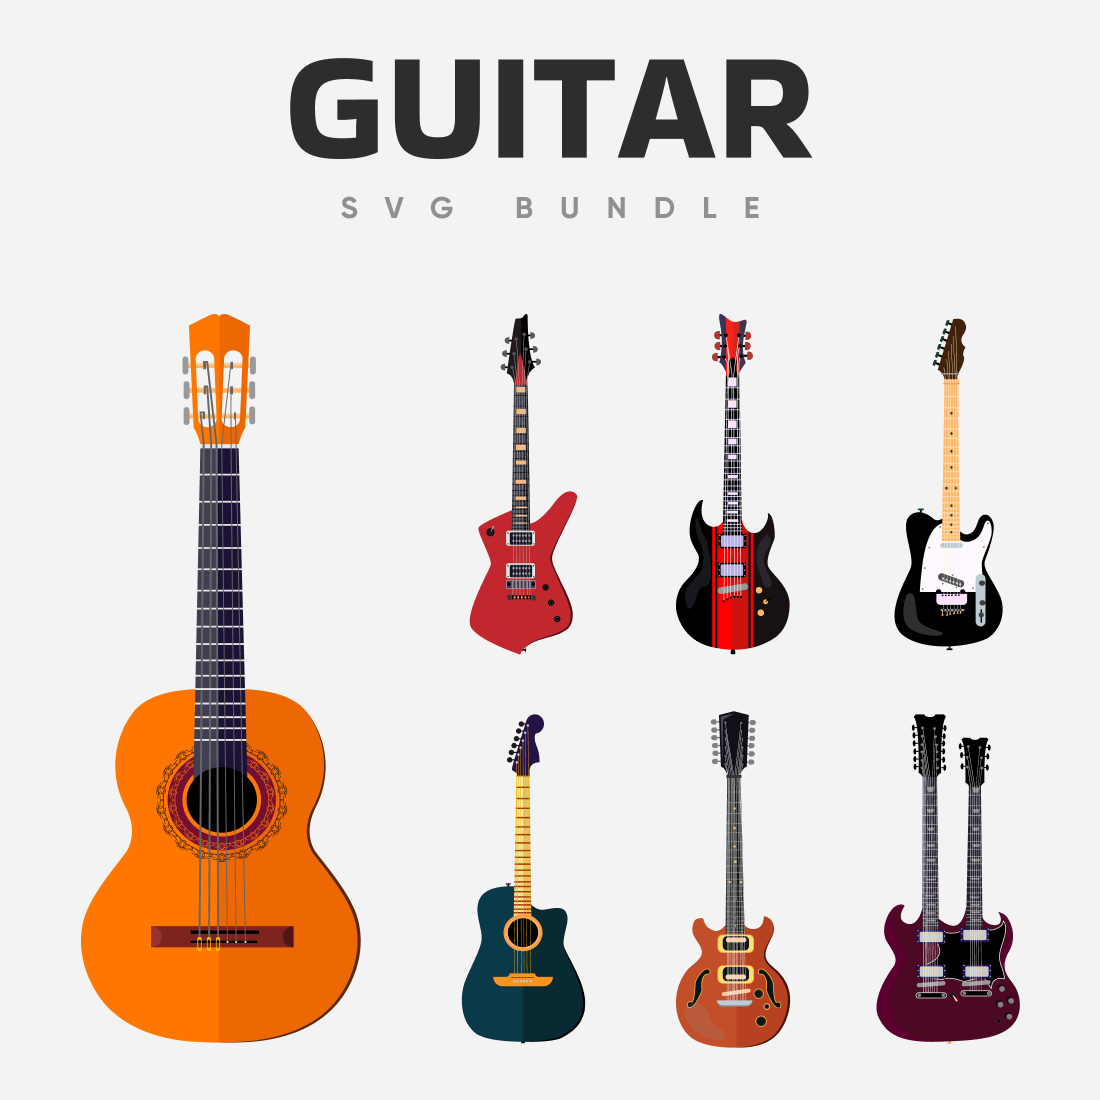 Guitar SVG bundle.